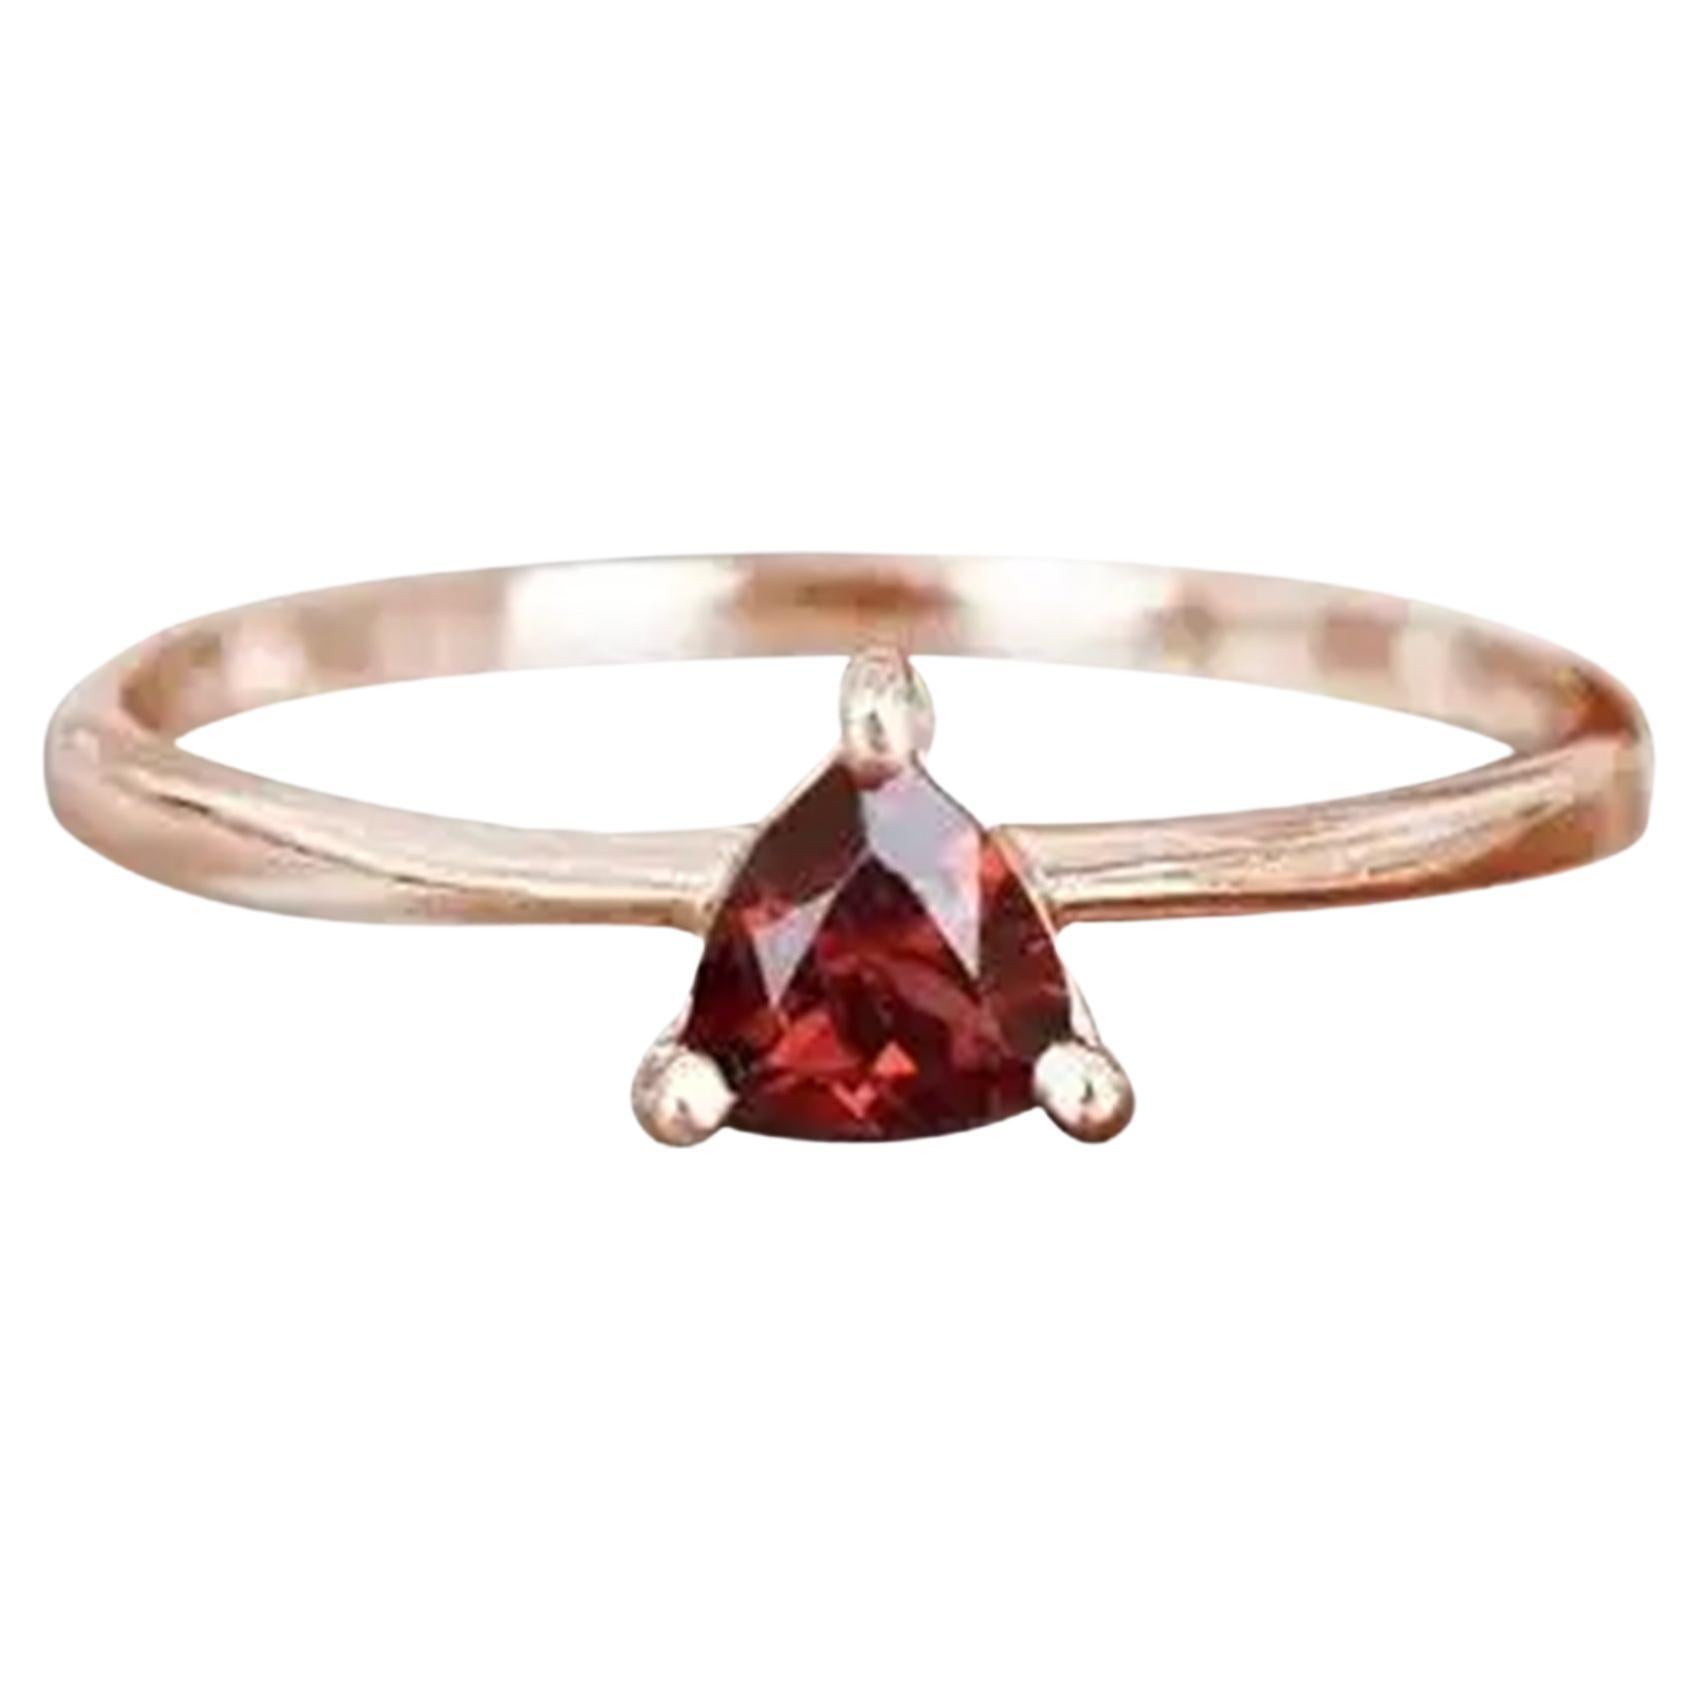 For Sale:  10k Gold Trillion Gemstone 6 mm Trillion Gemstone Engagement Ring Stackable Ring